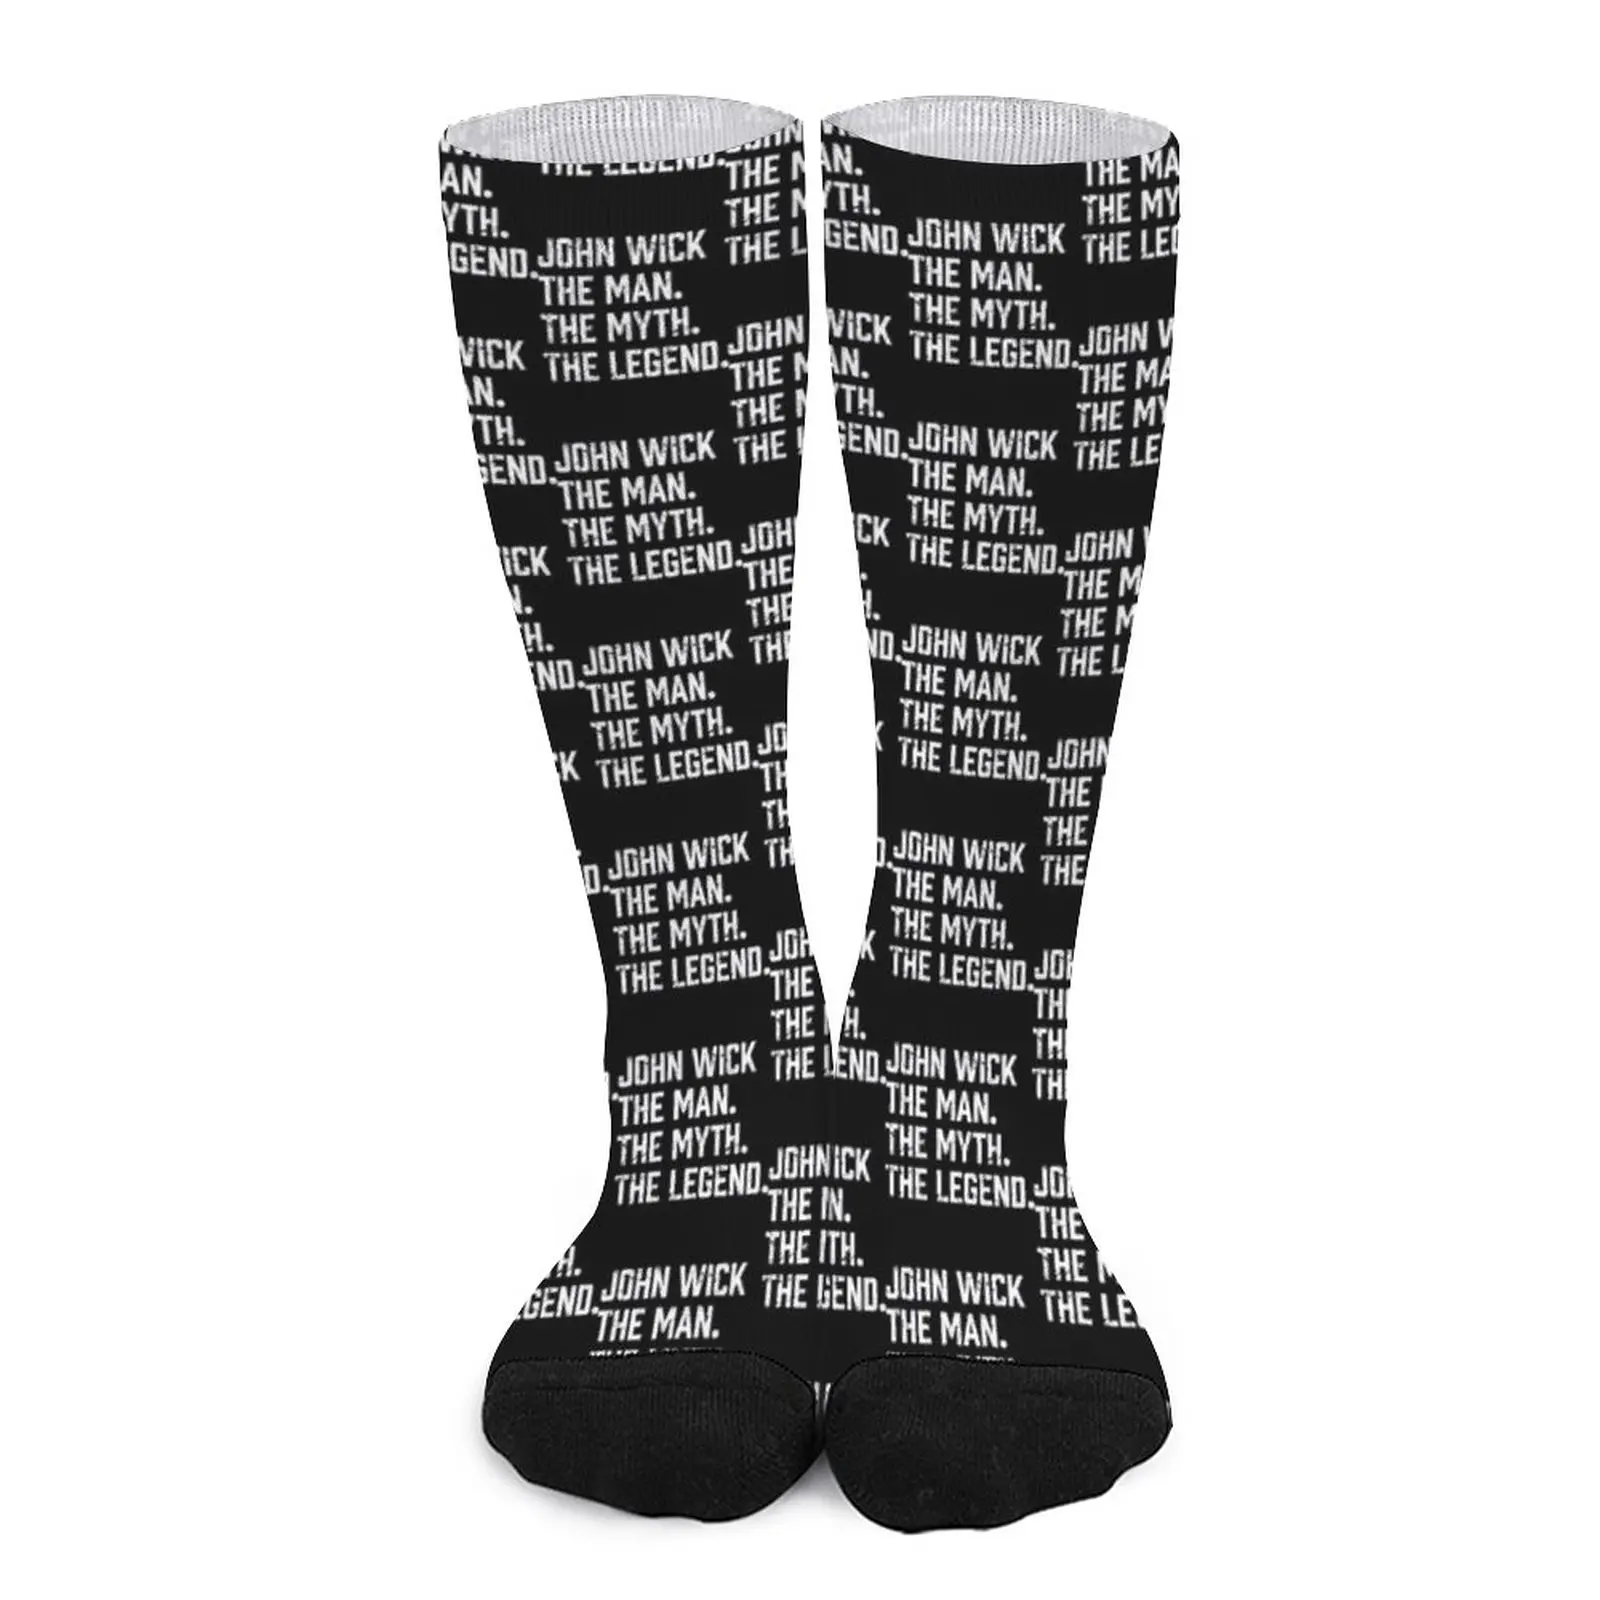 The Man The. Myth. The Legend John Wick Socks moving stockings Funny socks